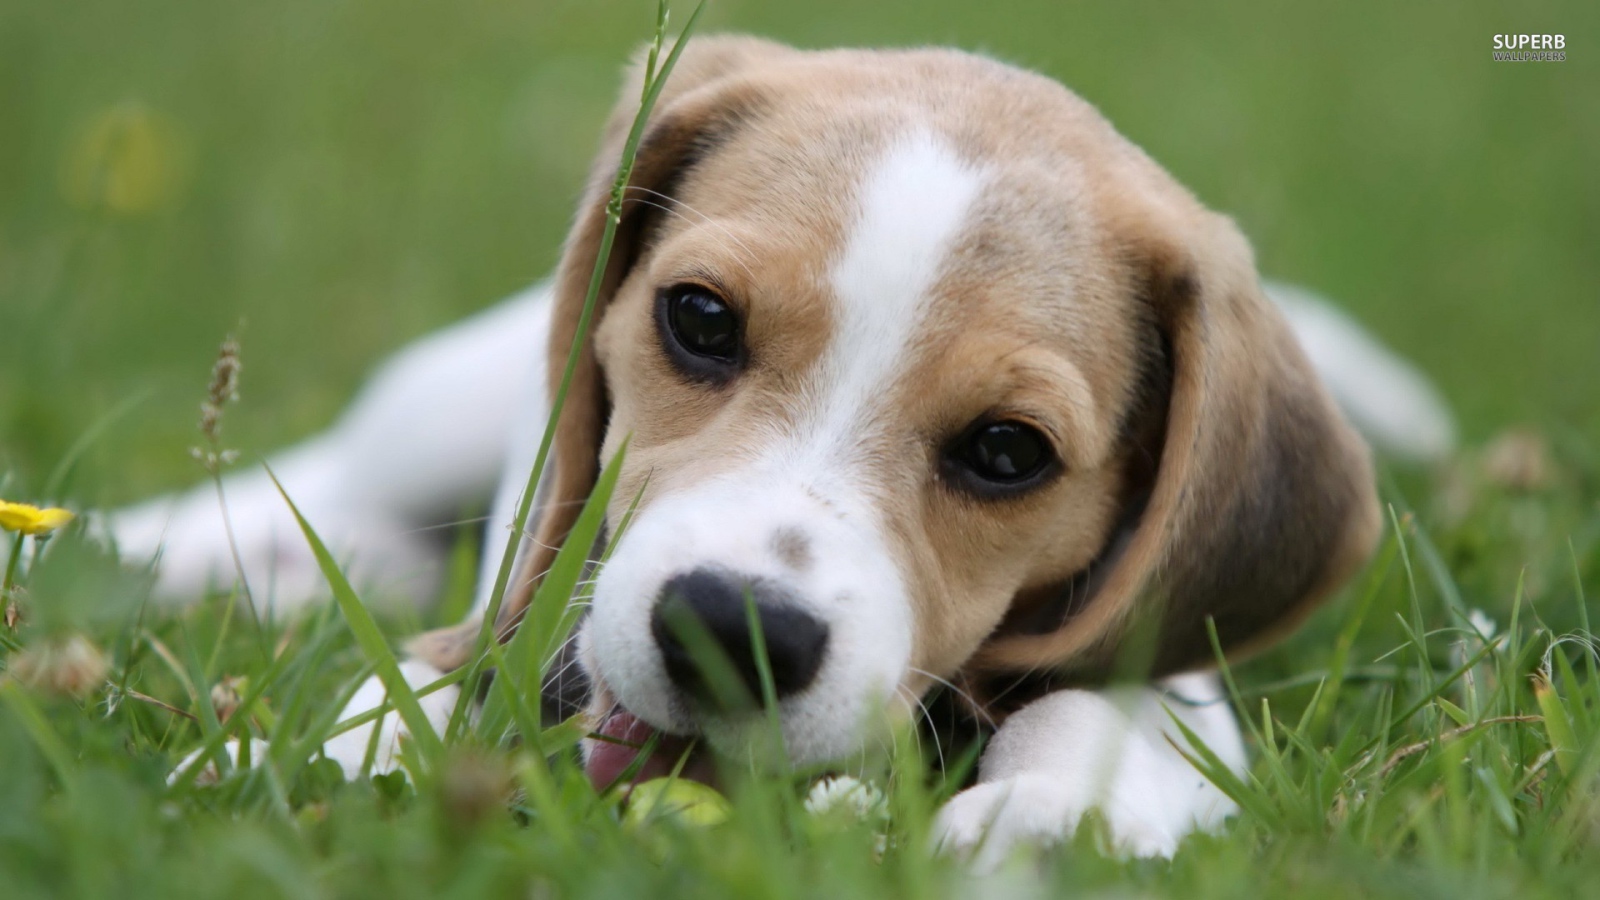 Cute beagle dog lying on the grass